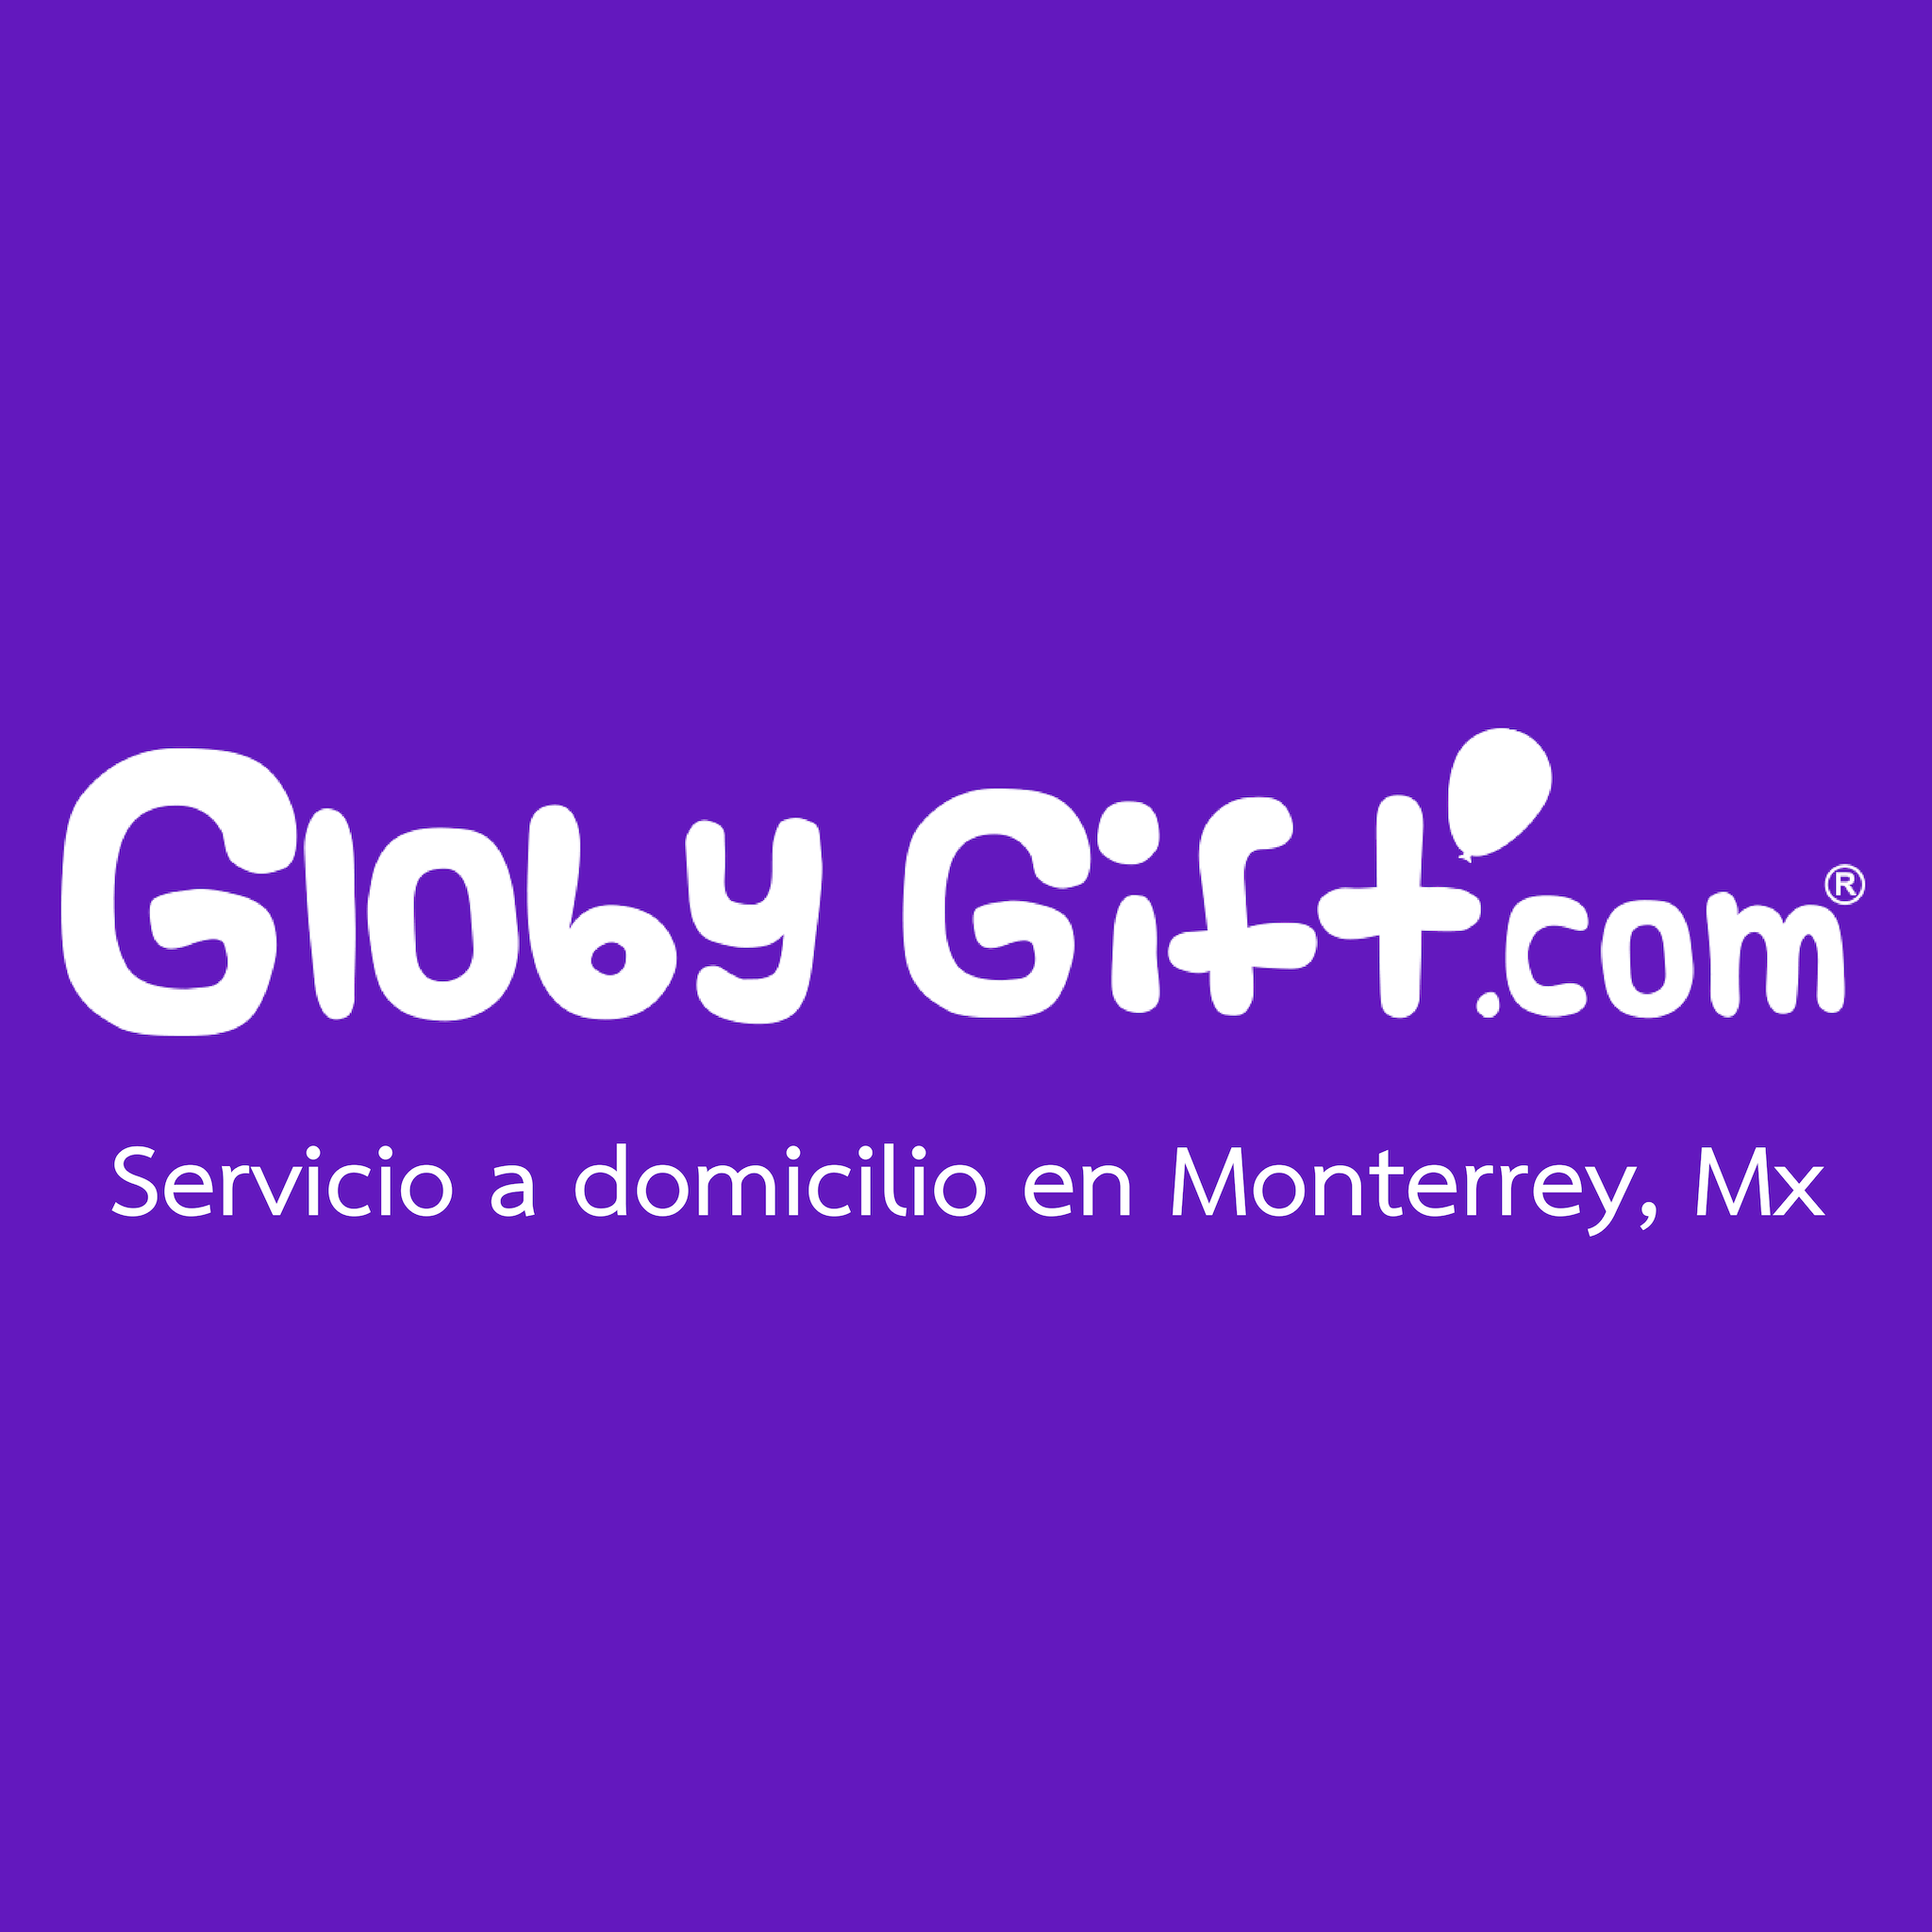 globygift.com